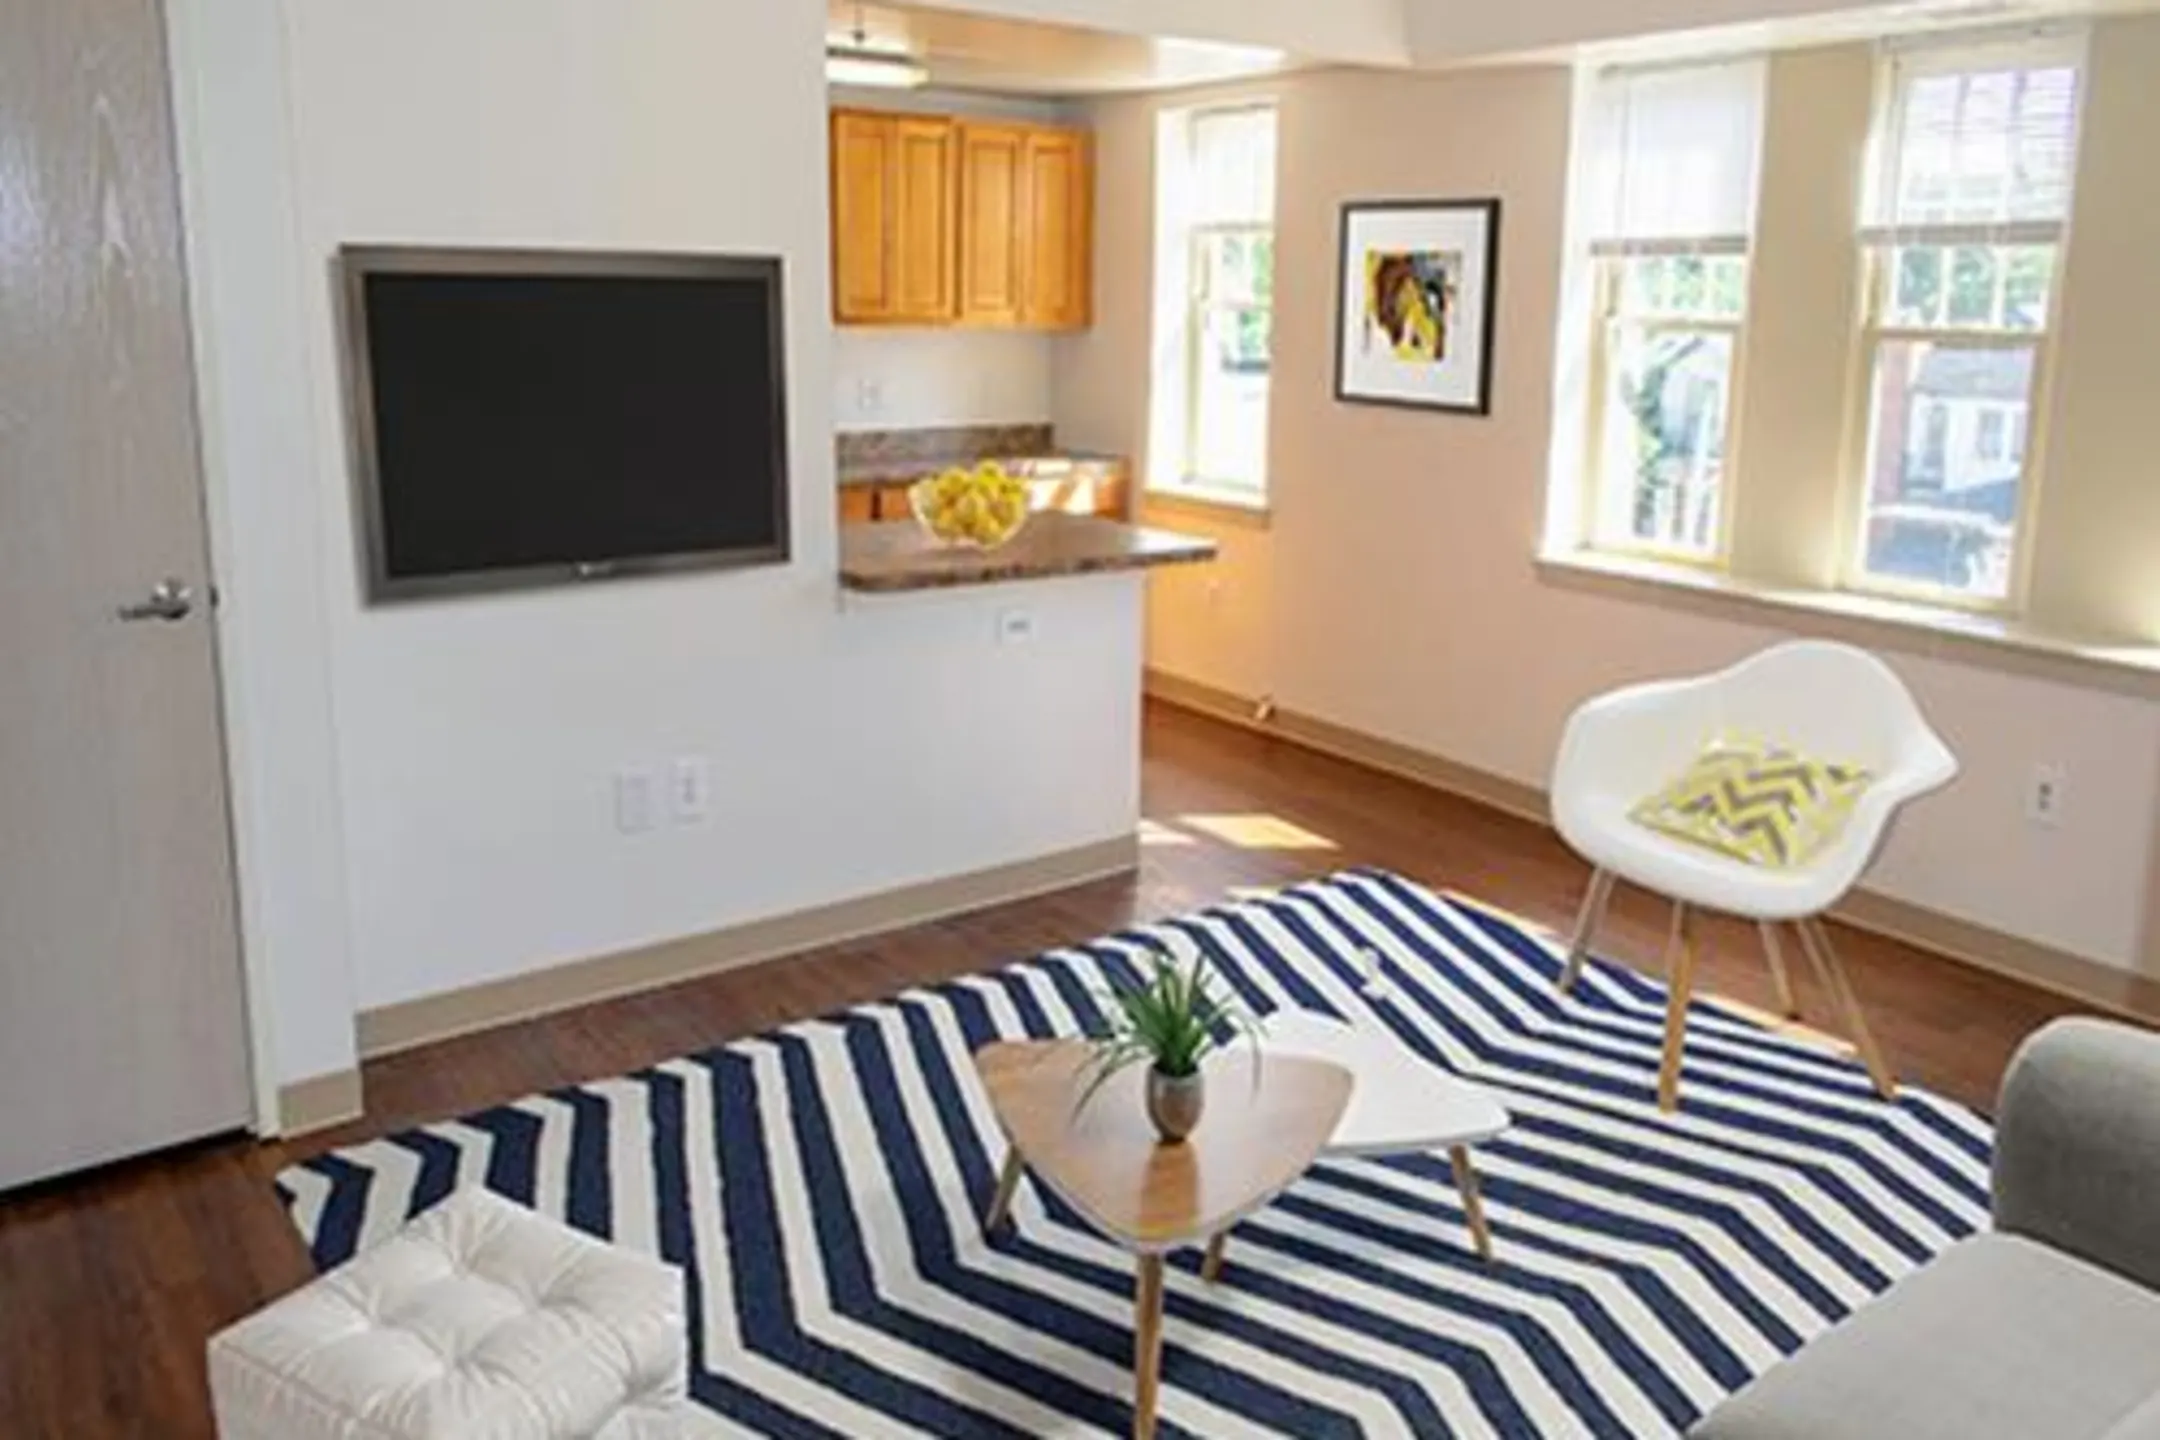 Living Room - Bernice Arms Senior Apartments (62+) - Philadelphia, PA